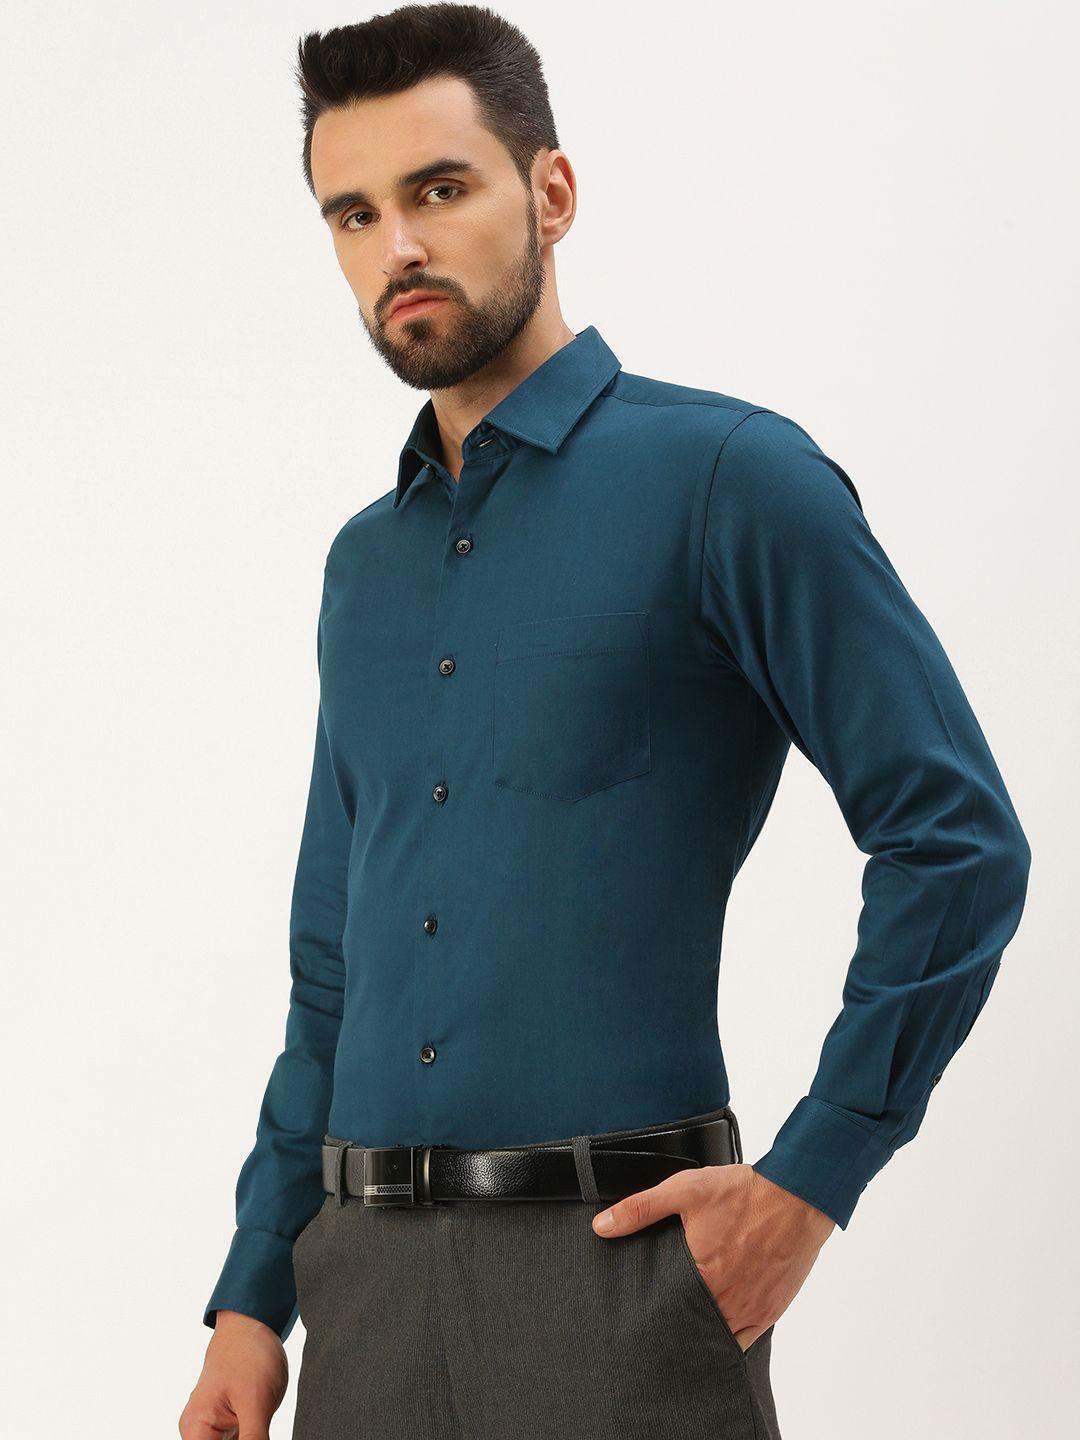 ivoc-men-teal-blue-solid-cotton-classic-slim-fit-formal-shirt